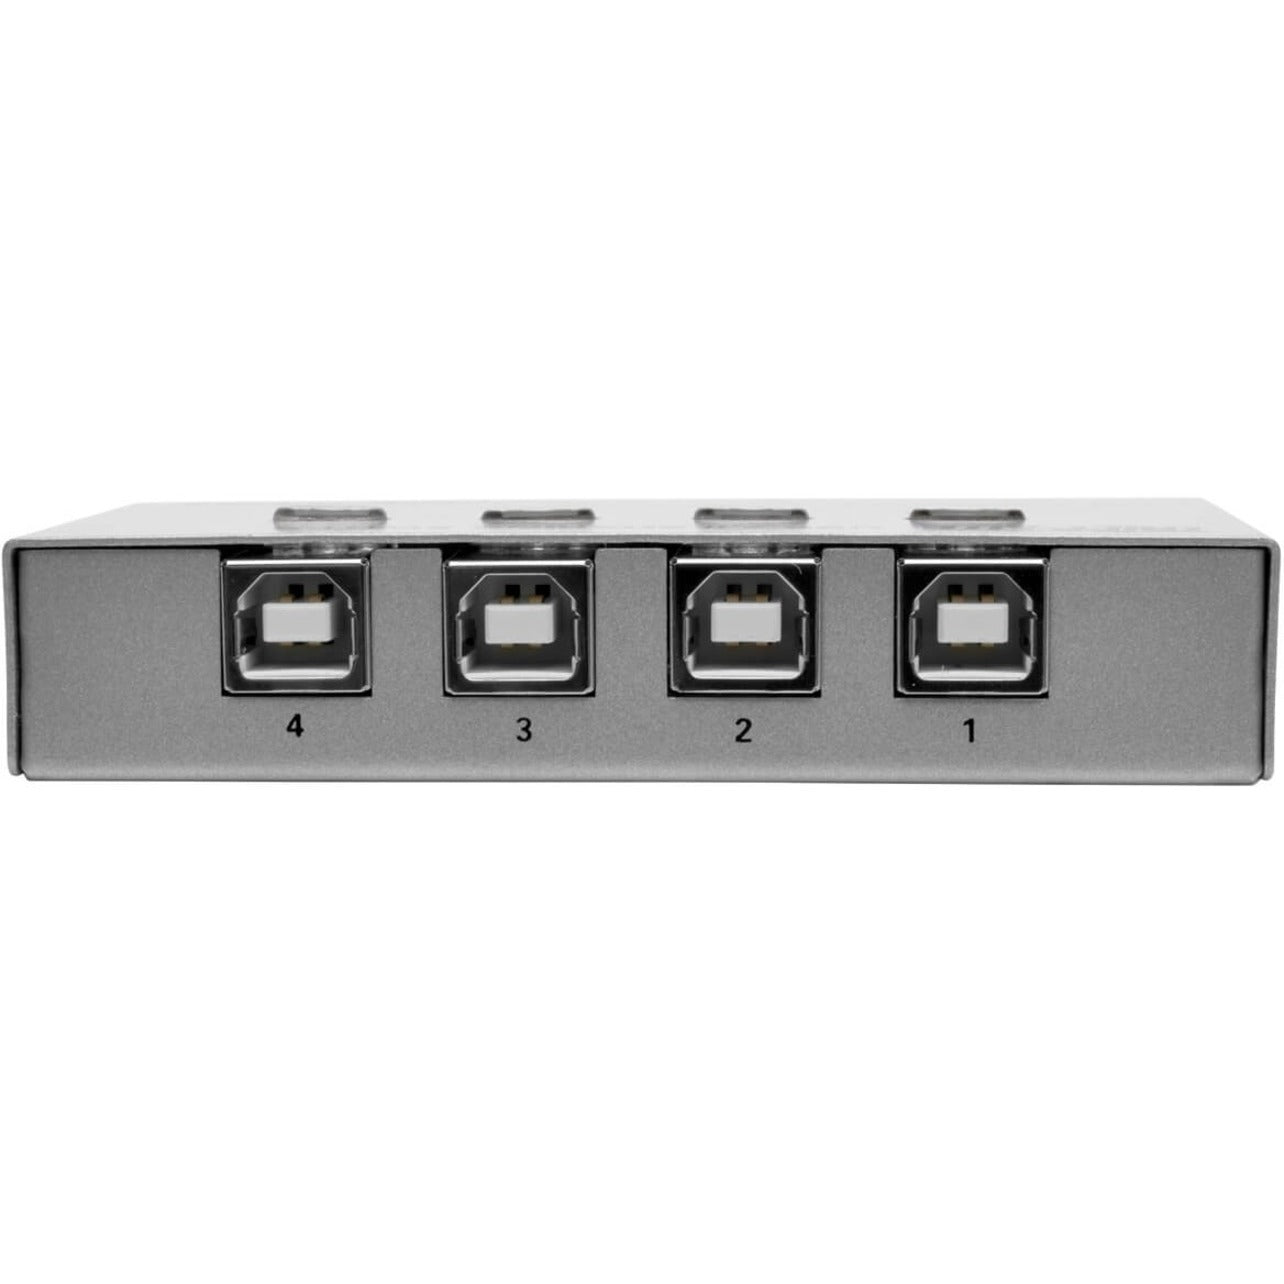 Tripp Lite U215-004-R 4-Port USB 2.0 Stampante / Periferica Condivisione Interruttore Condividi Stampante Tra Più Computer